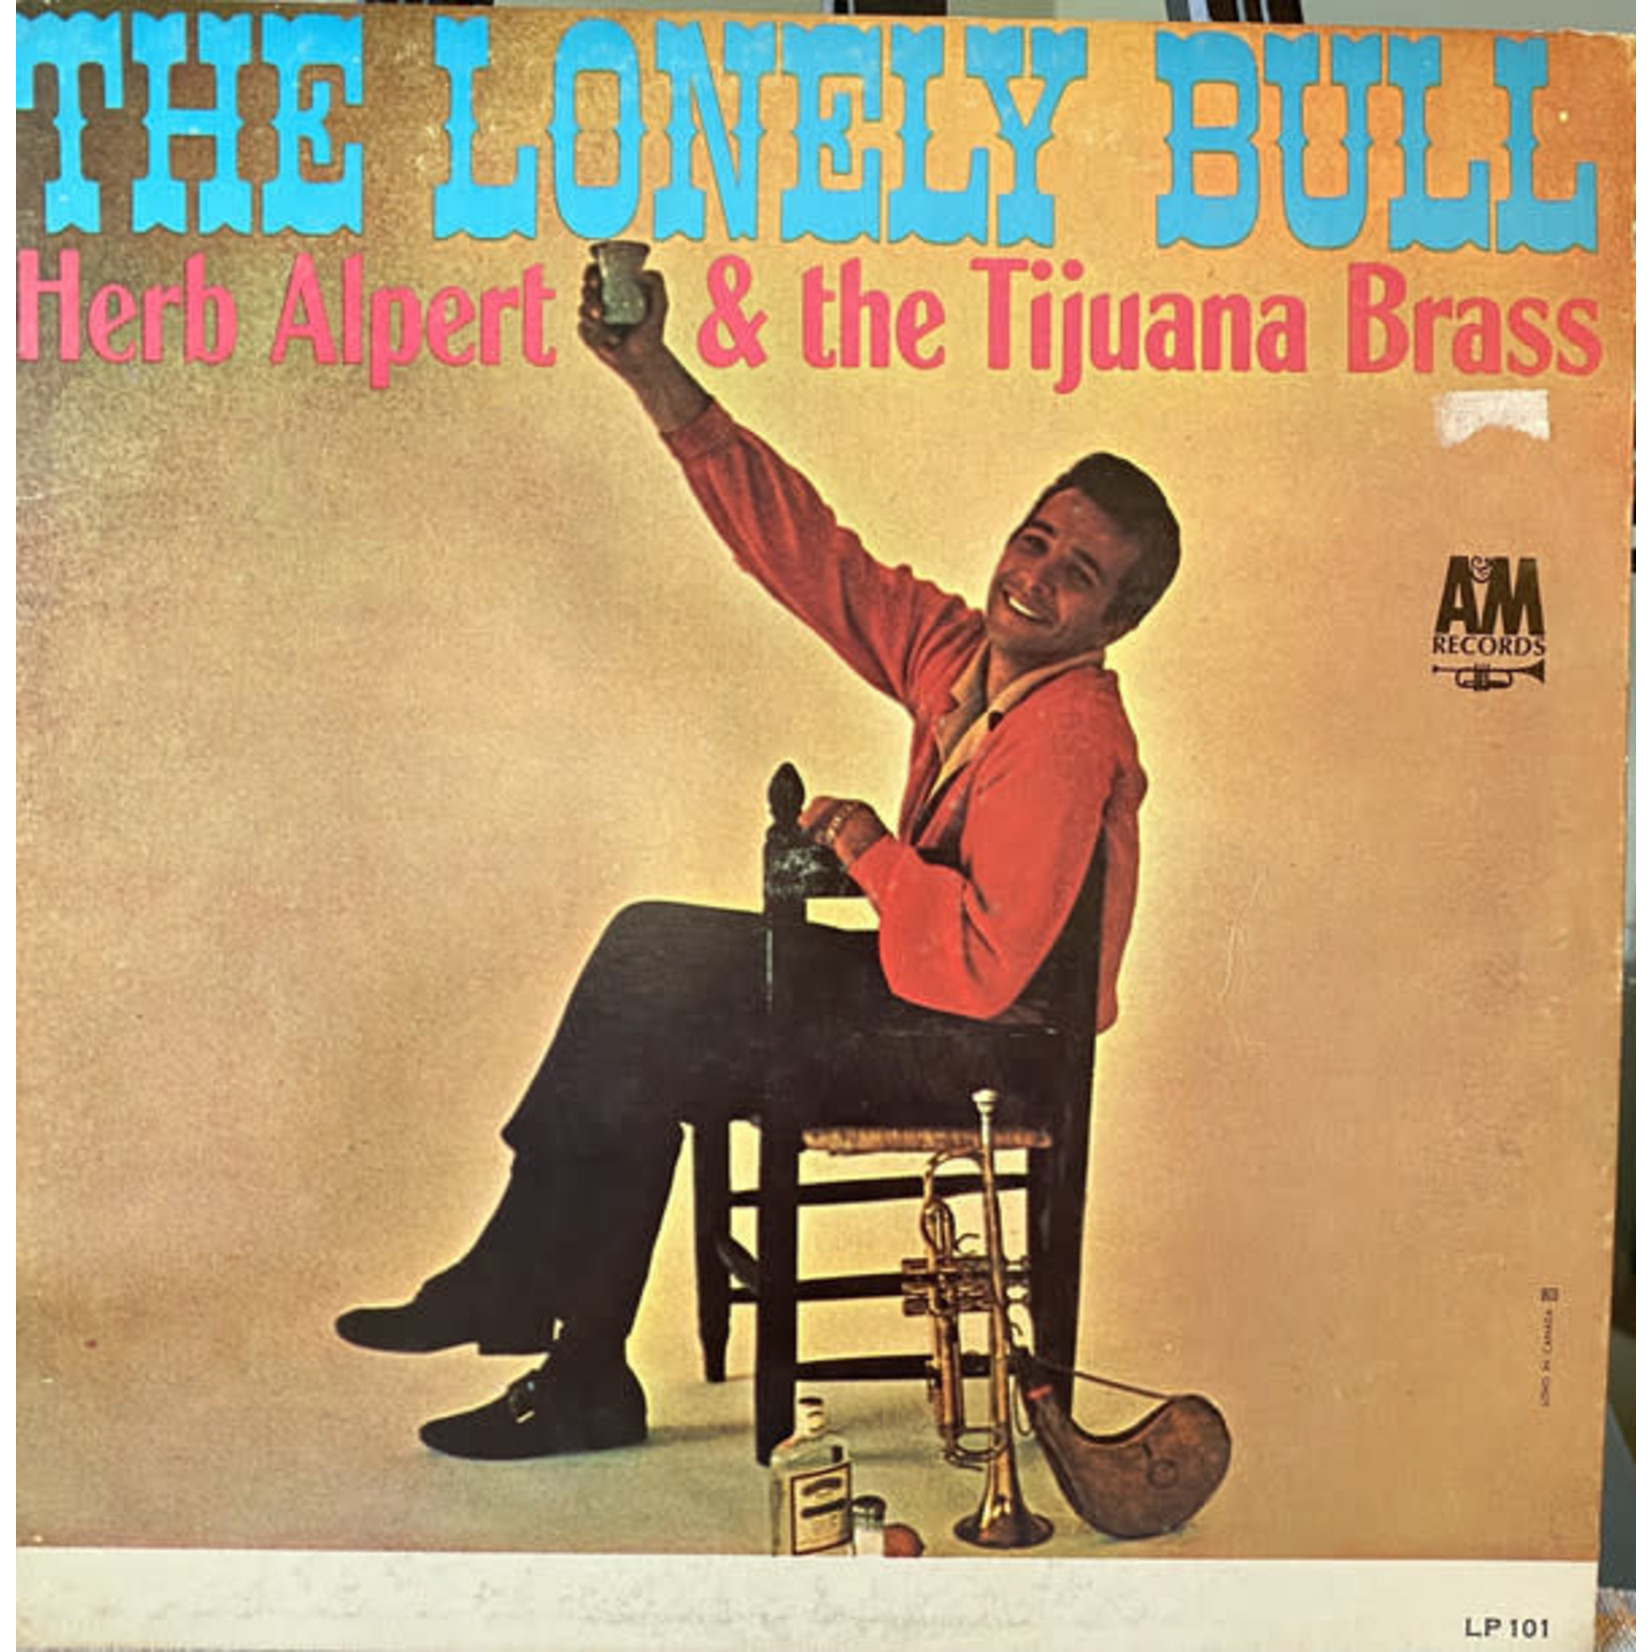 Herb Alpert Herb Alpert & The Tijuana Brass – The Lonely Bull (G)